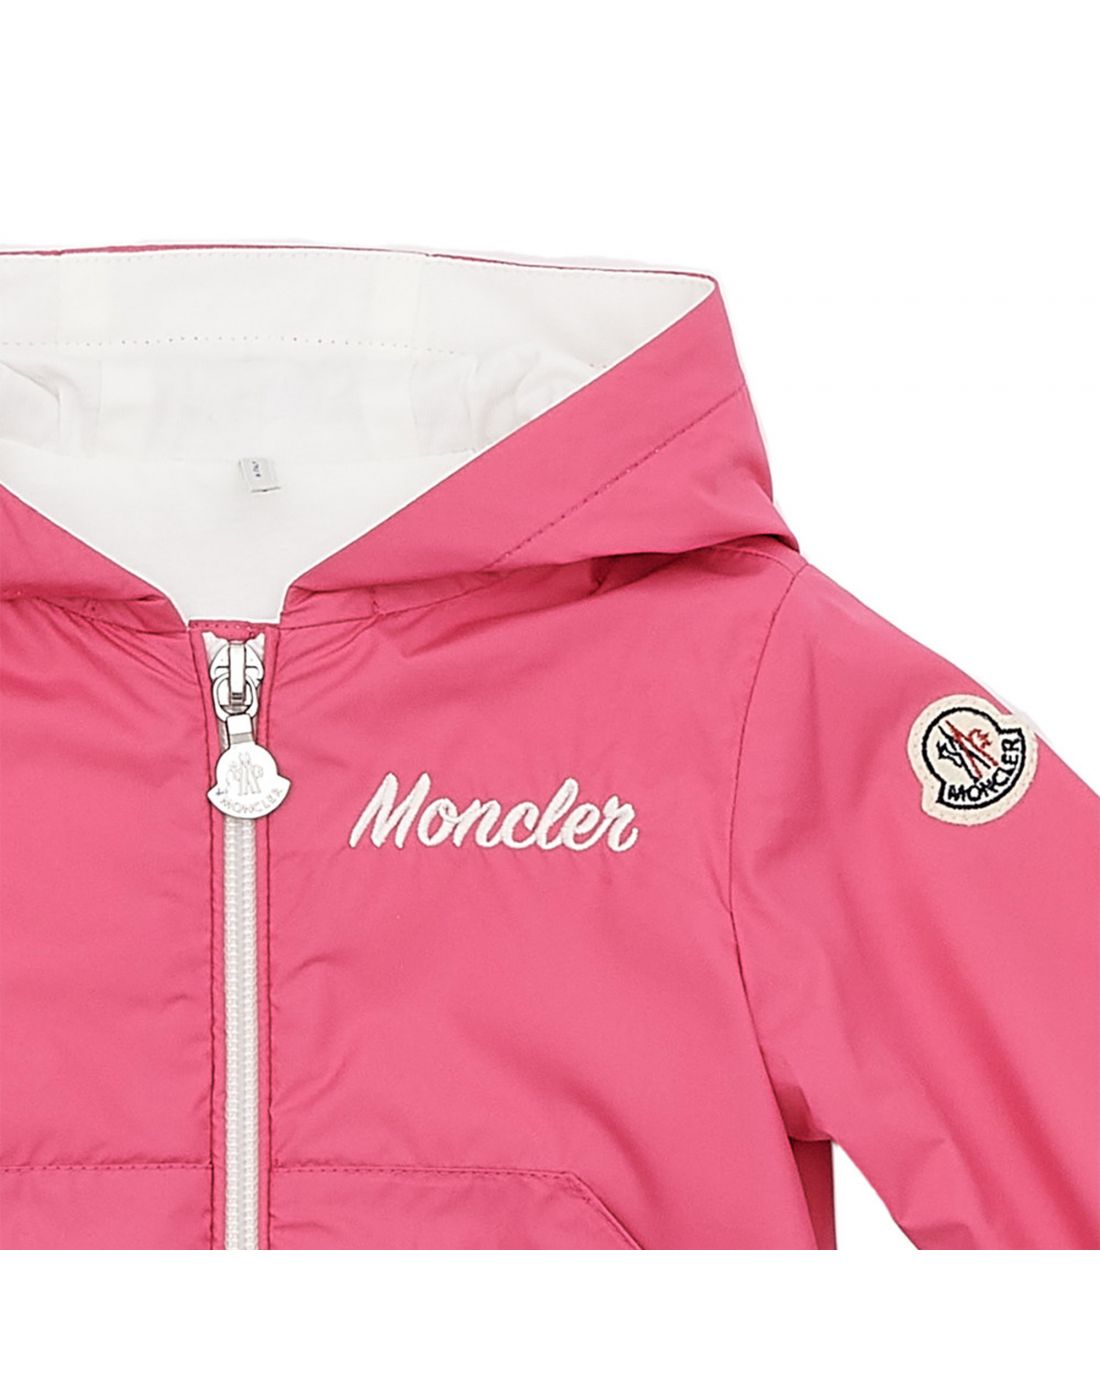 Moncler Baby Jacket